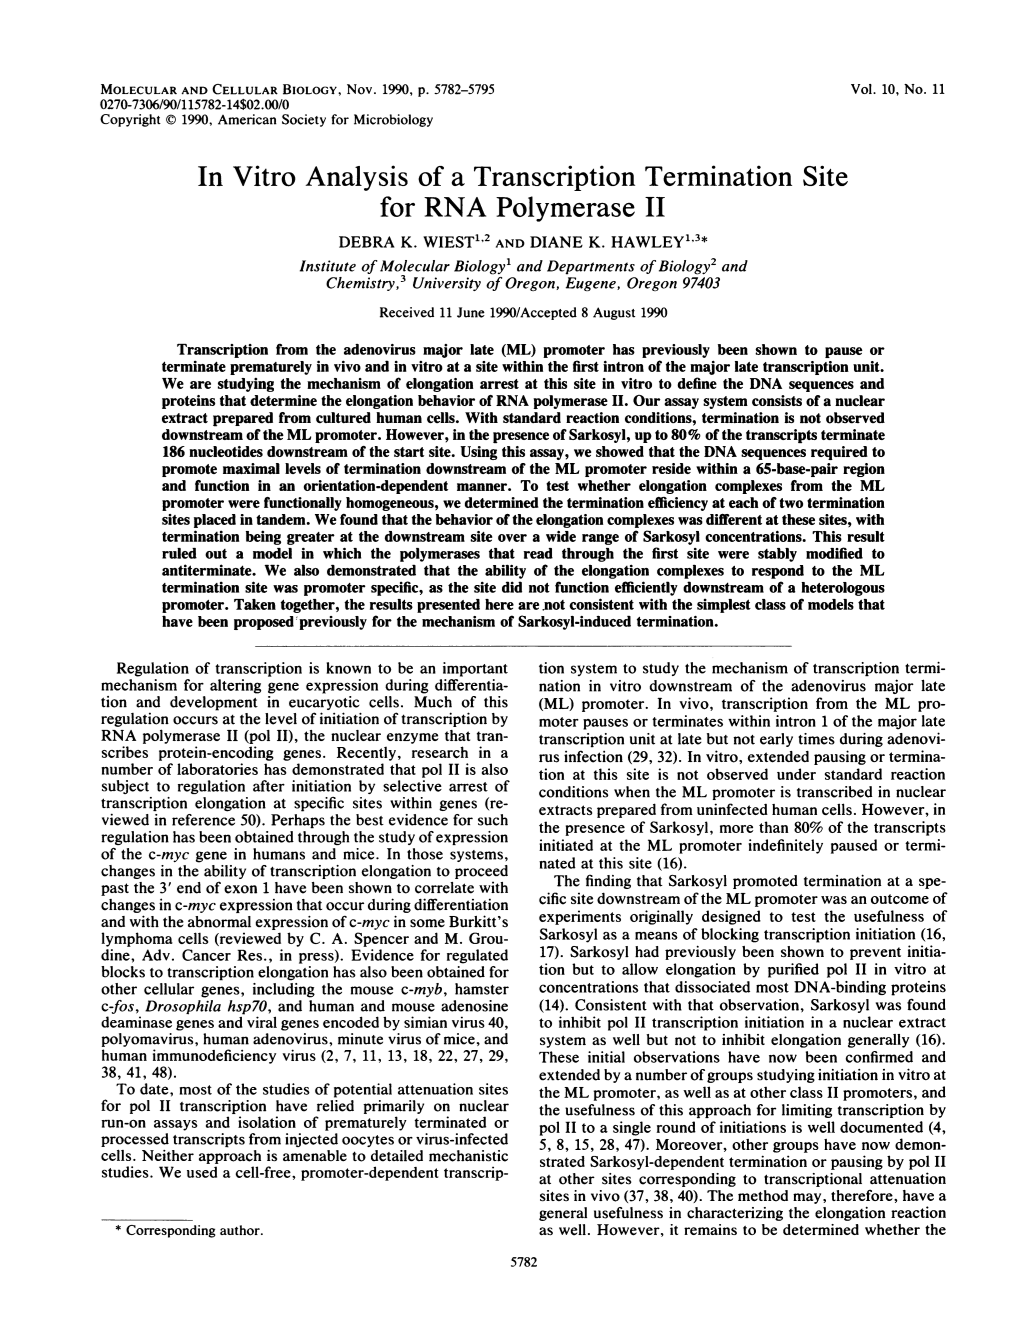 In Vitro Analysis of a Transcription Termination Site for RNA Polymerase II DEBRA K